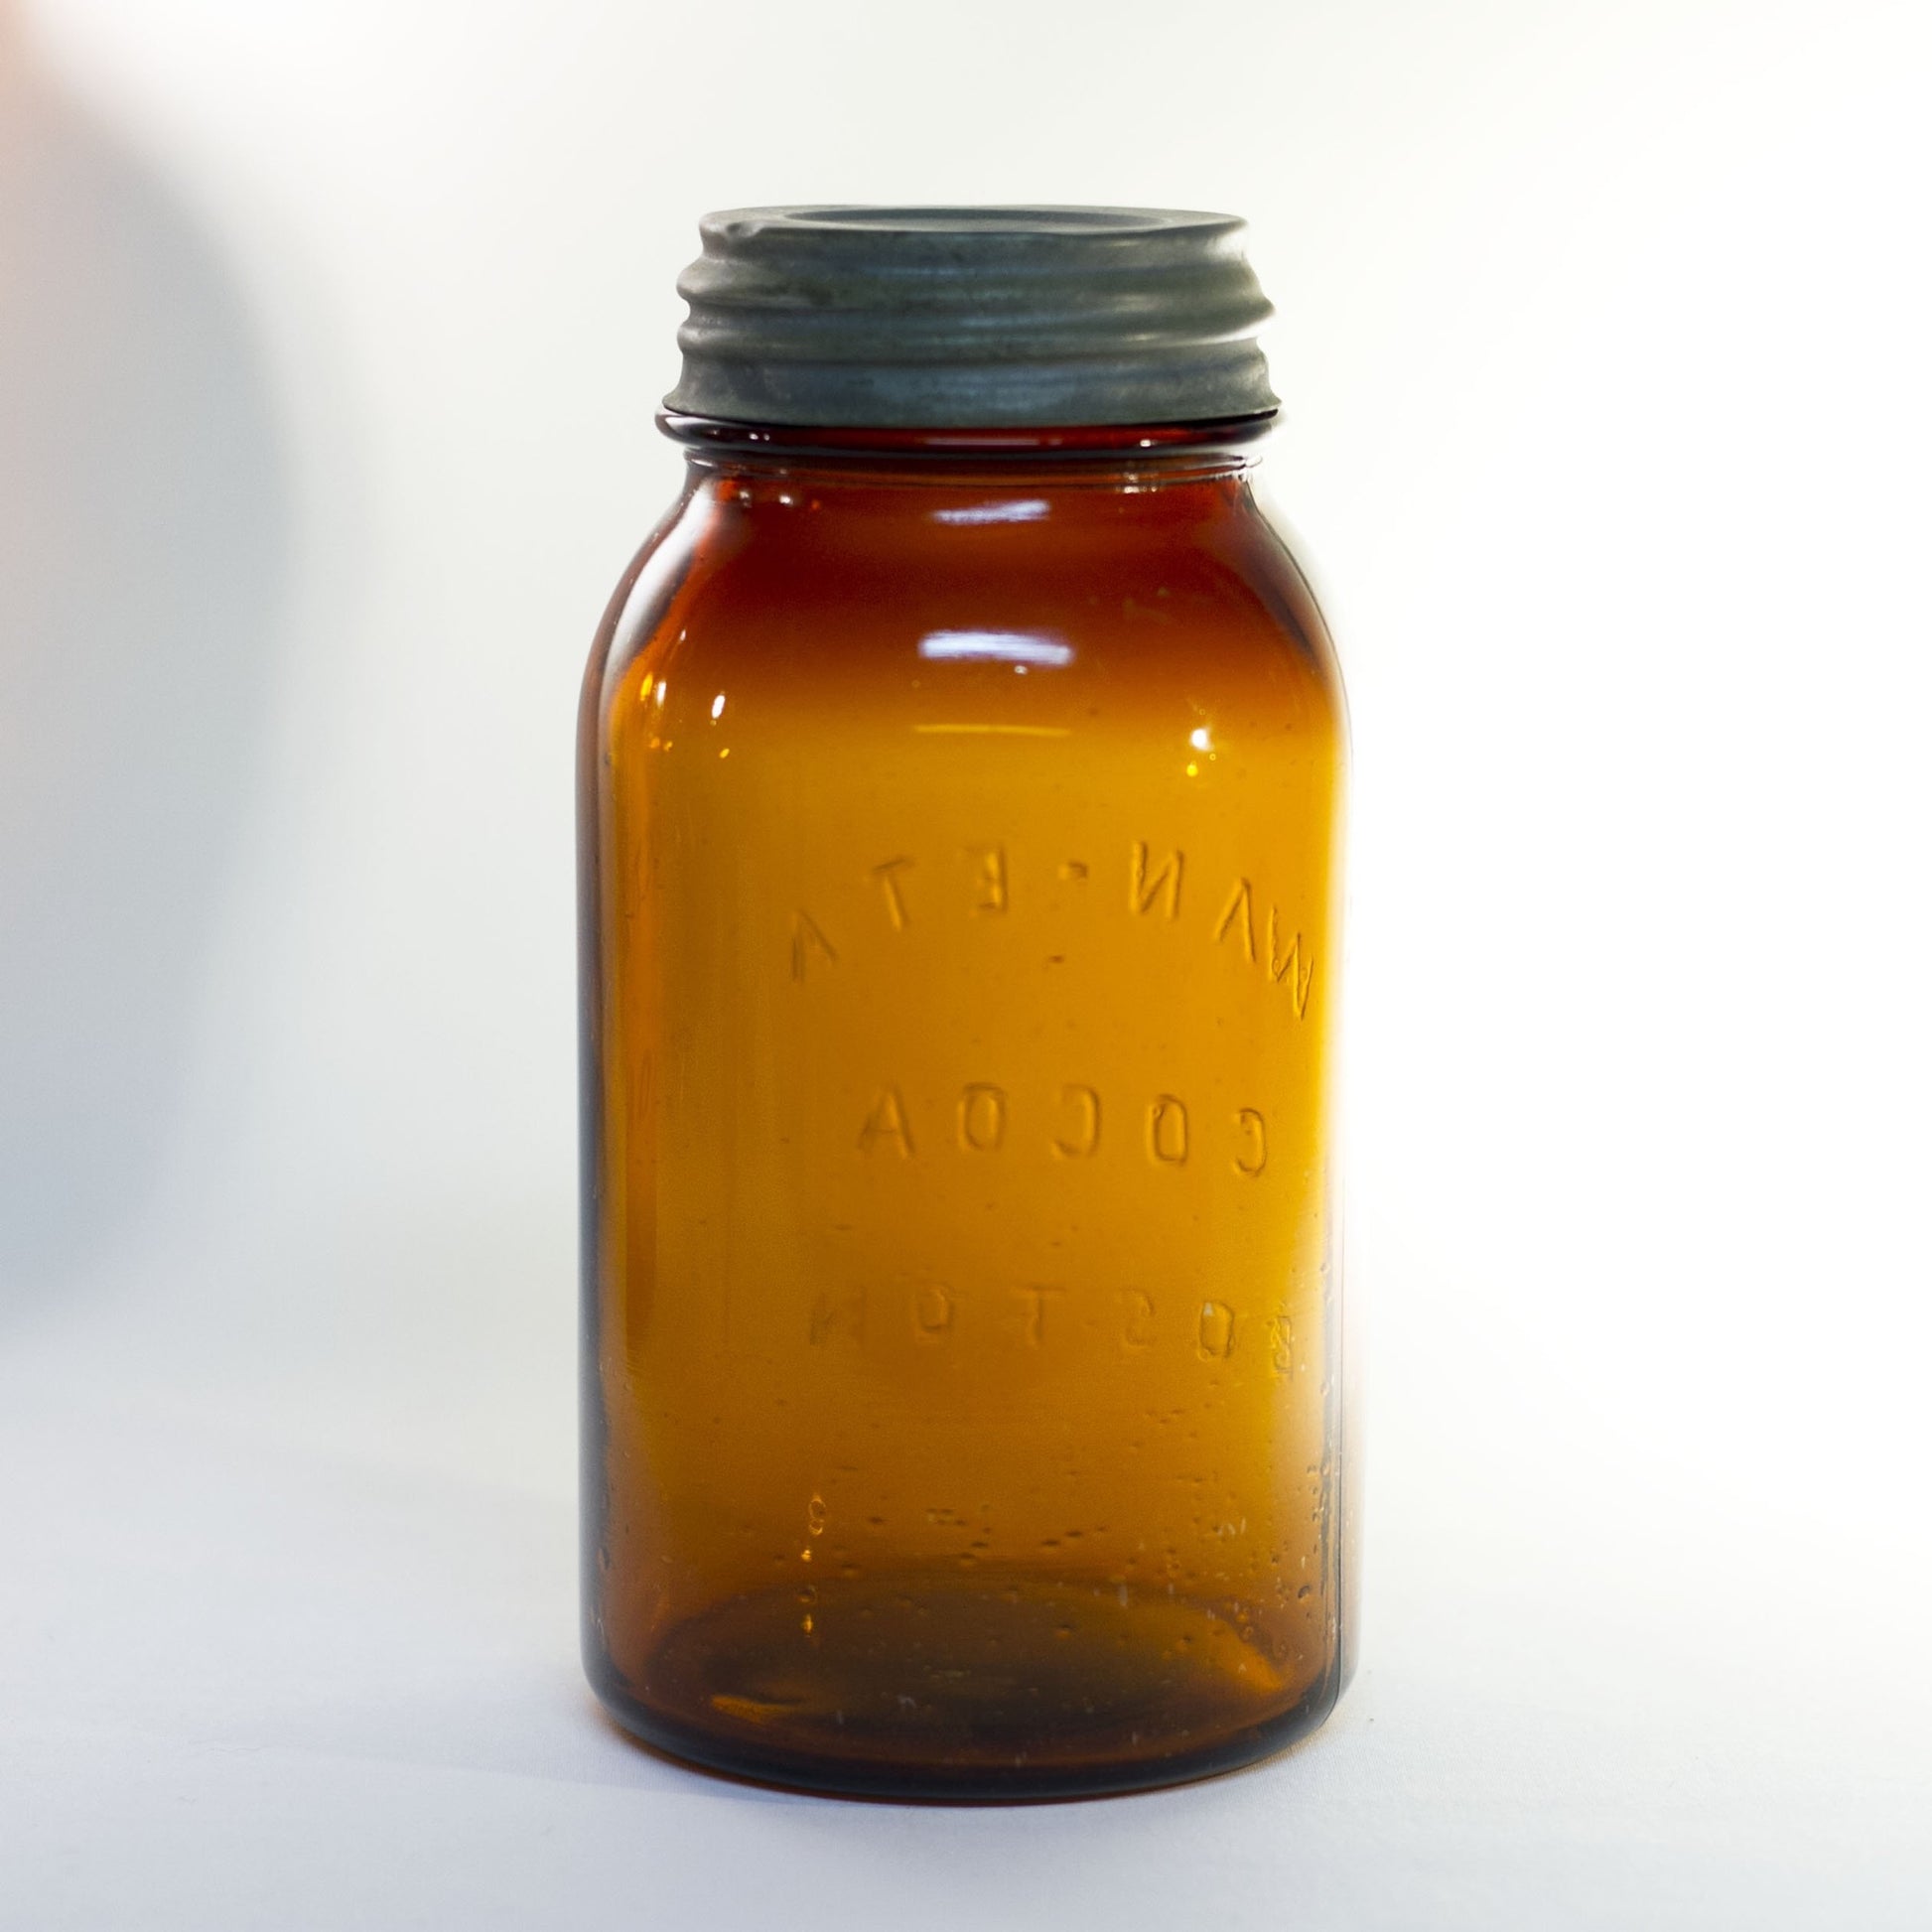 Vintage Amber Glass WAN-ETA COCOA Quart-Size Mason Jar Distributed by the Massachusetts Chocolate Company of Boston Circa 1920 to 1930